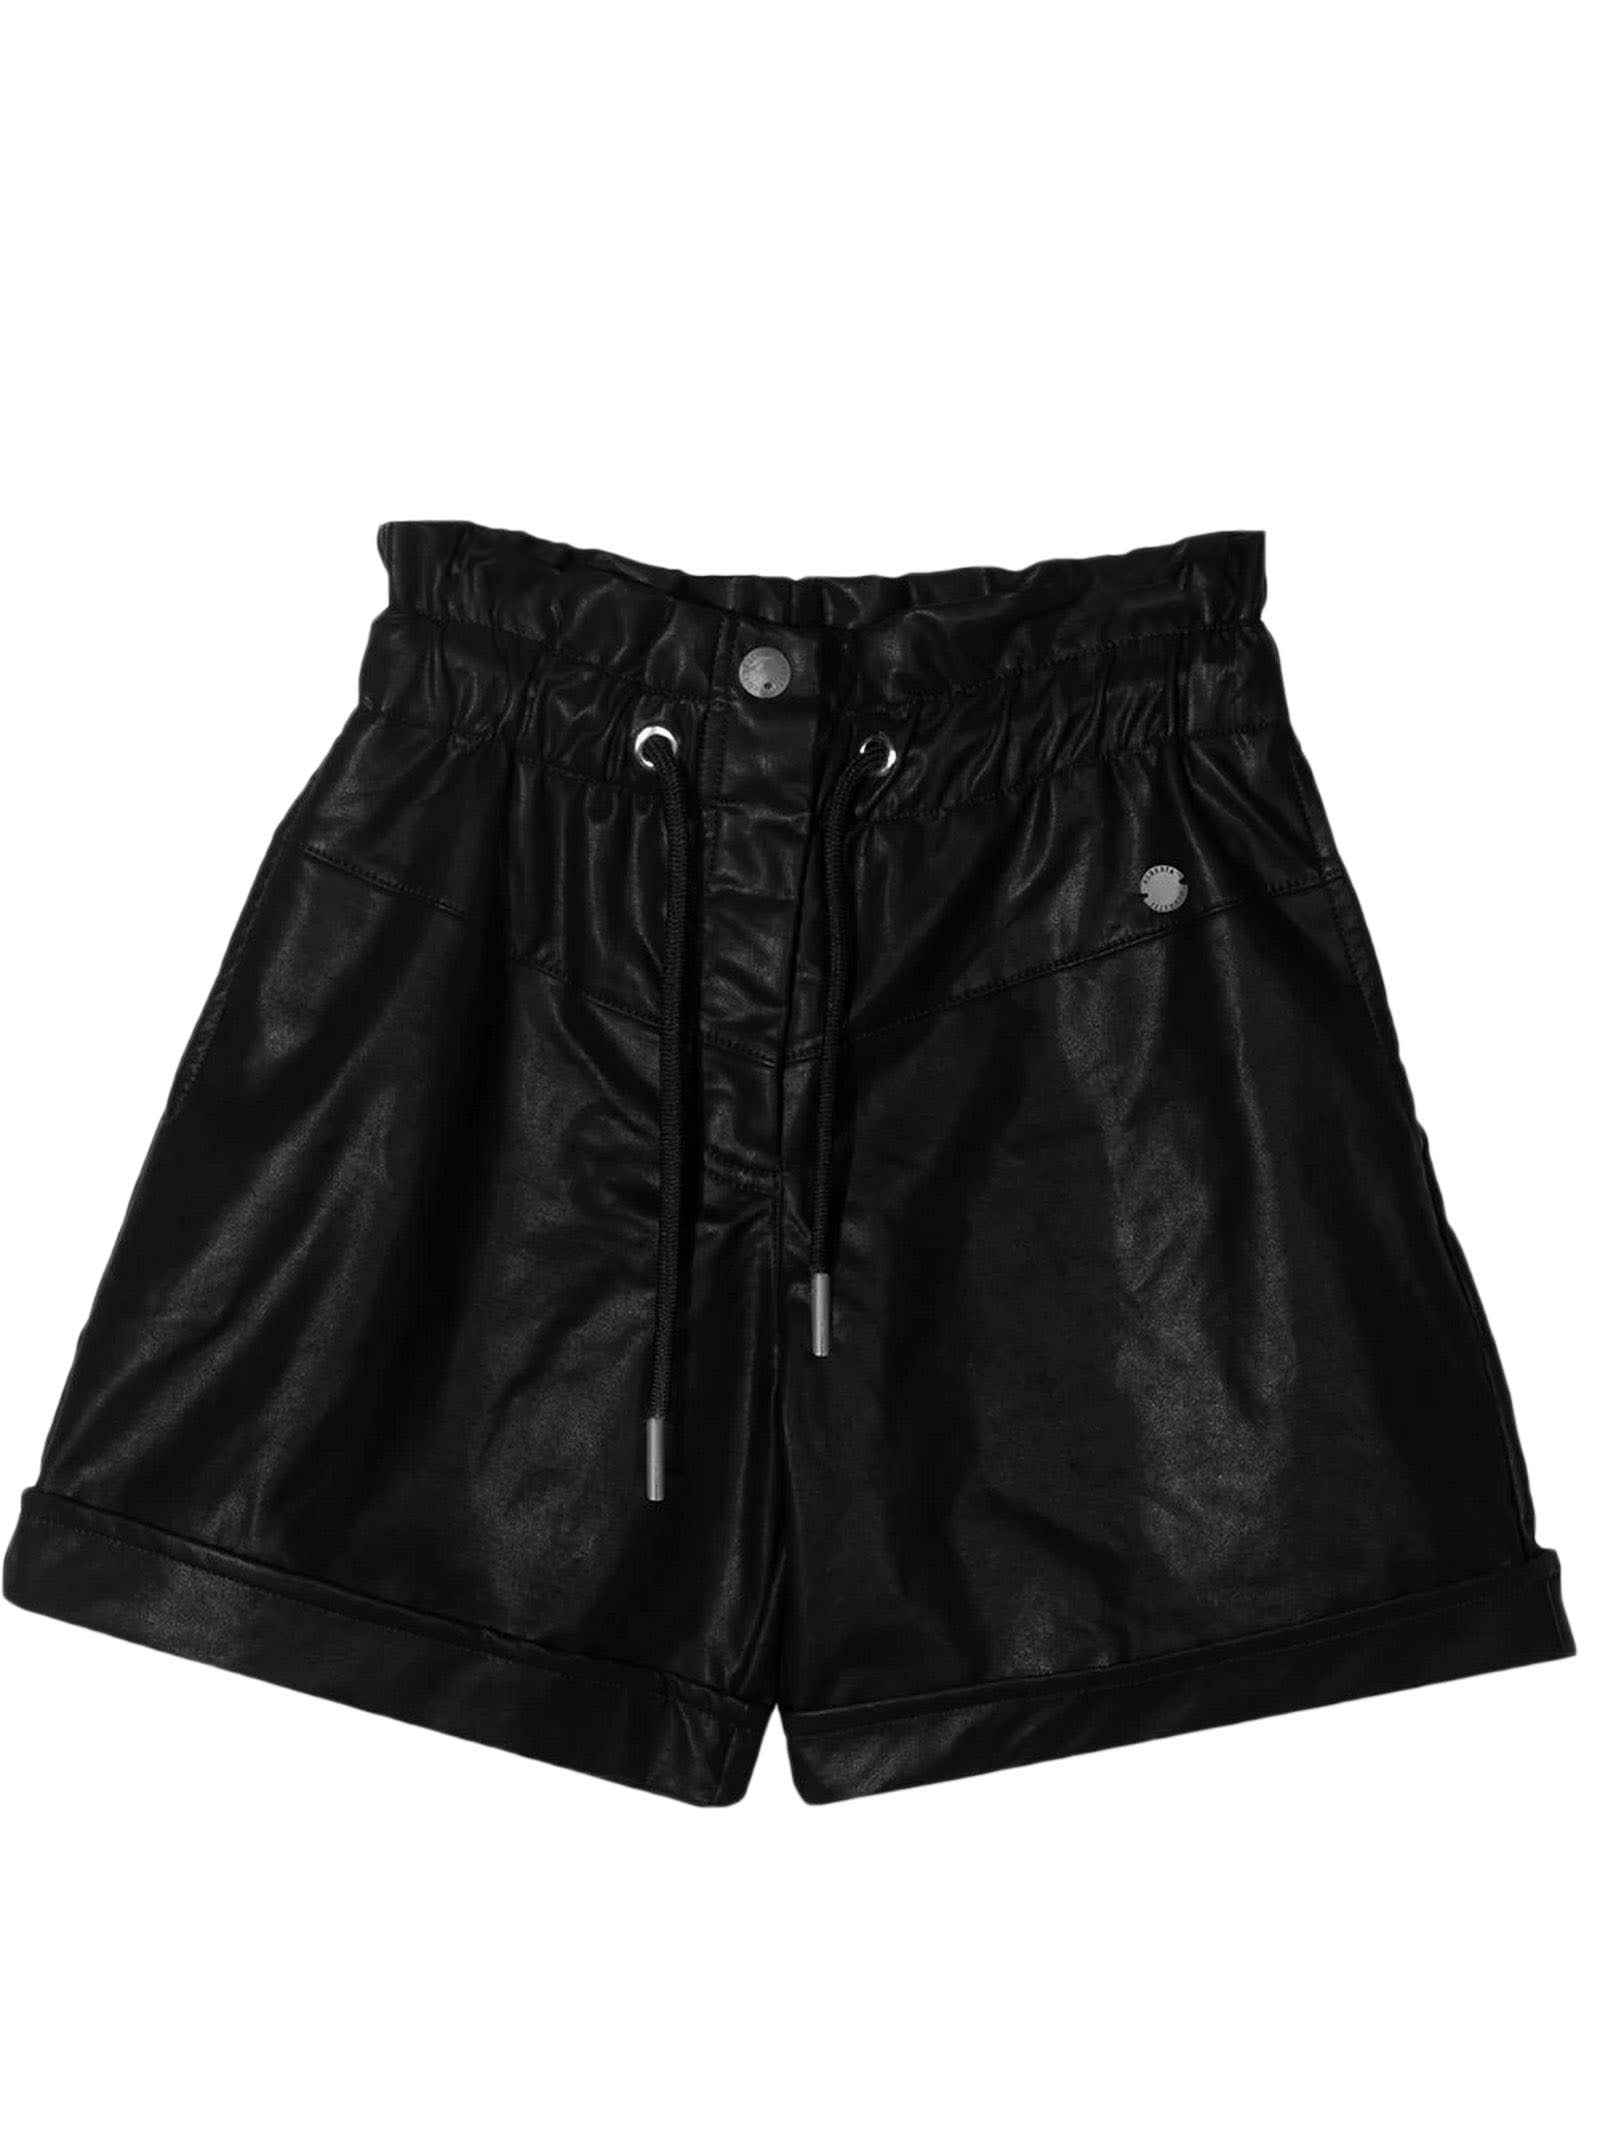 Alberta Ferretti Black Faux Leather Shorts